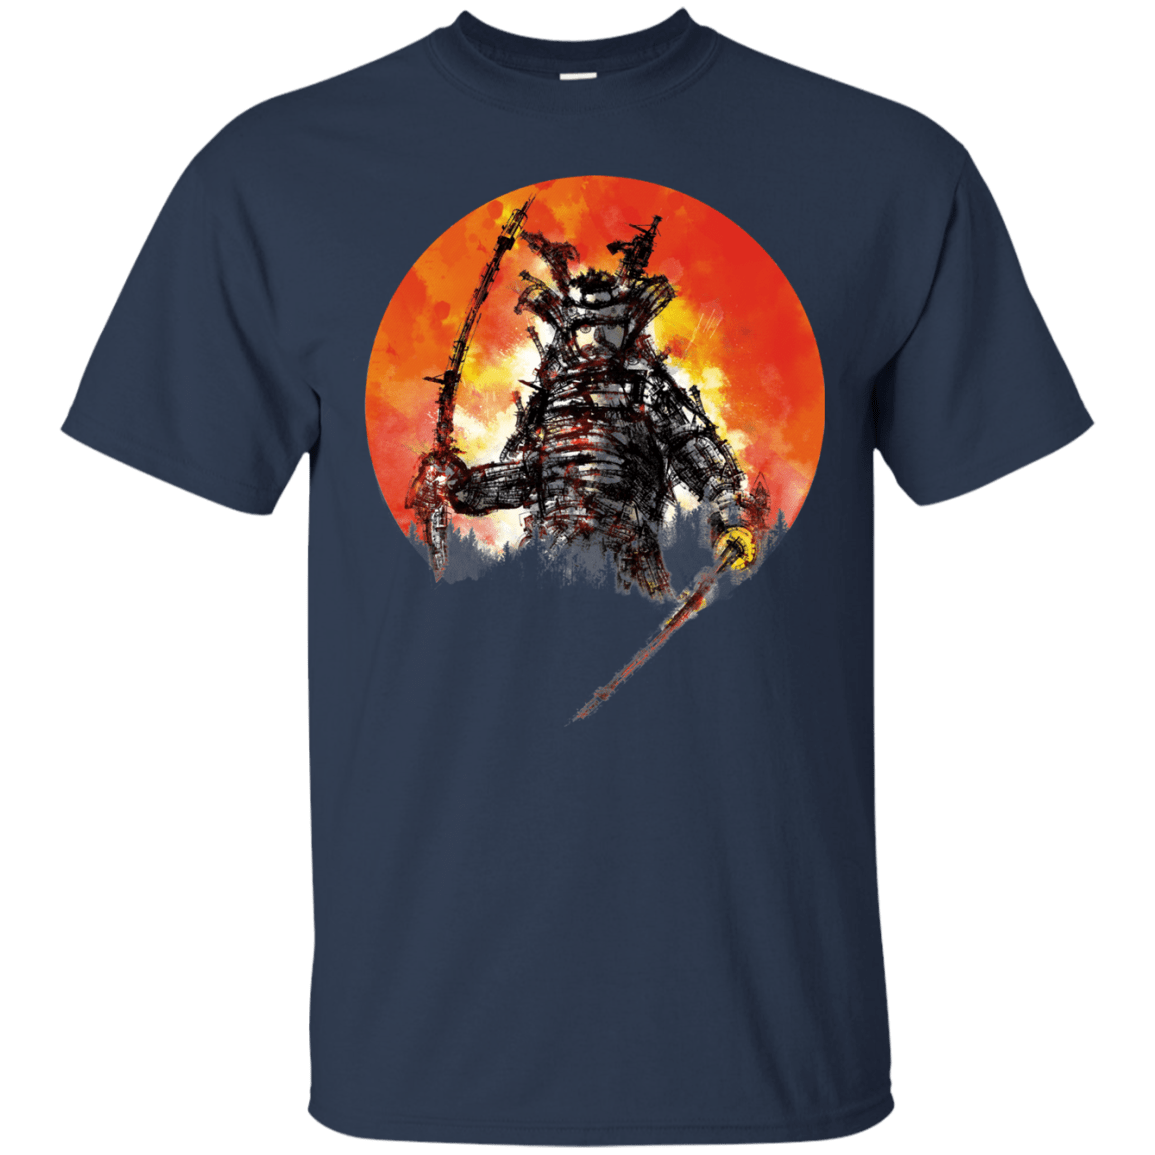 T-Shirts Navy / S Samurai Bot T-Shirt